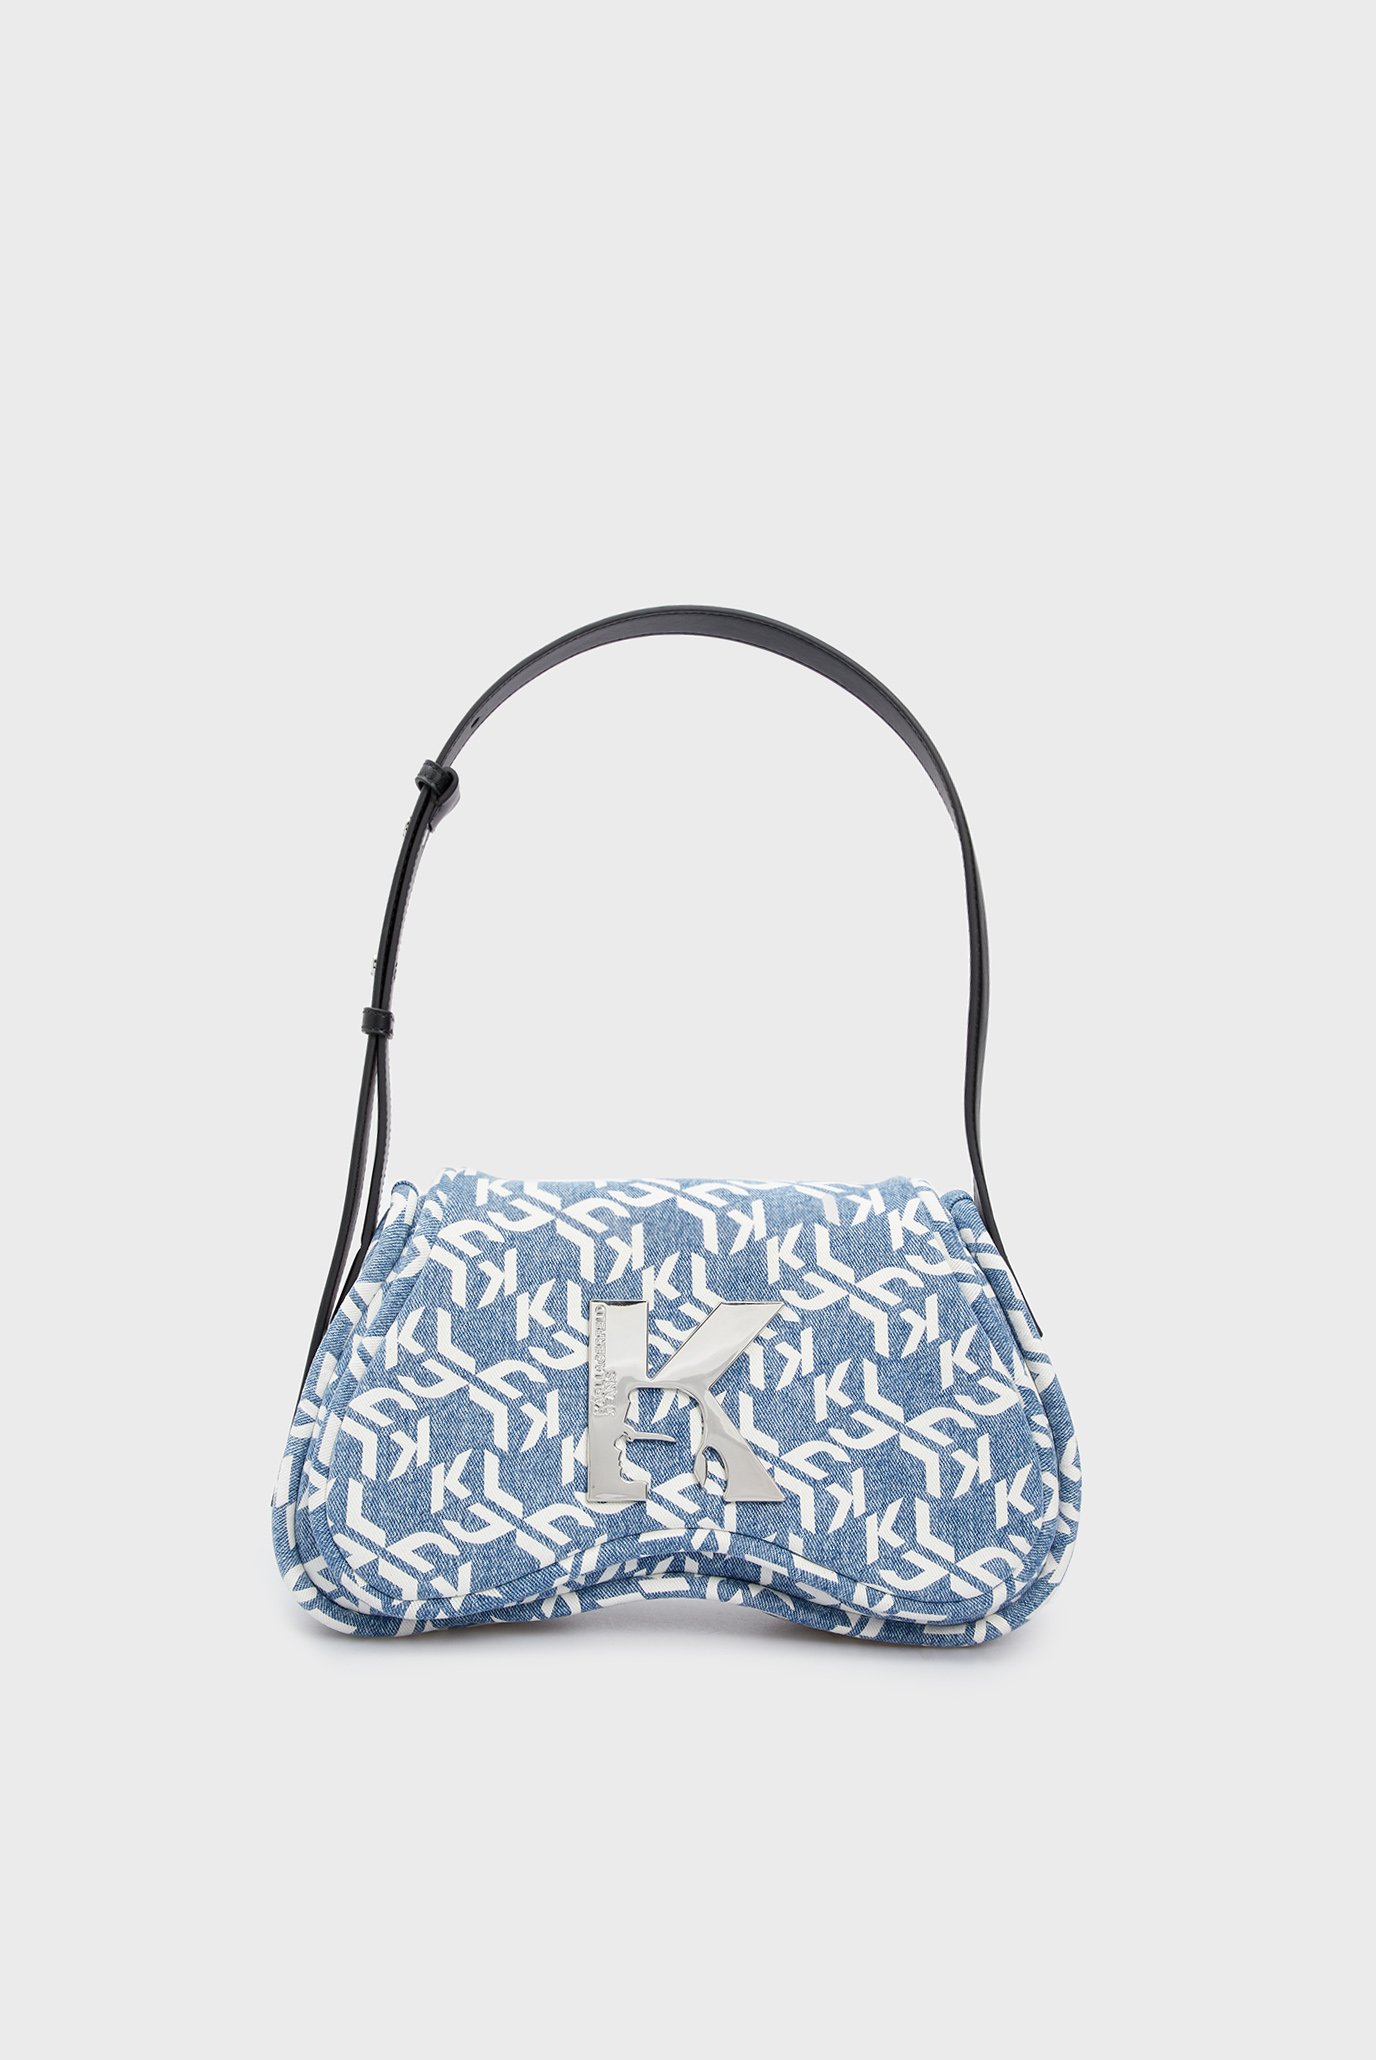 Жіноча синя джинсова сумка з візерунком SUNGLASS DENIM SHOULDER BAG 1